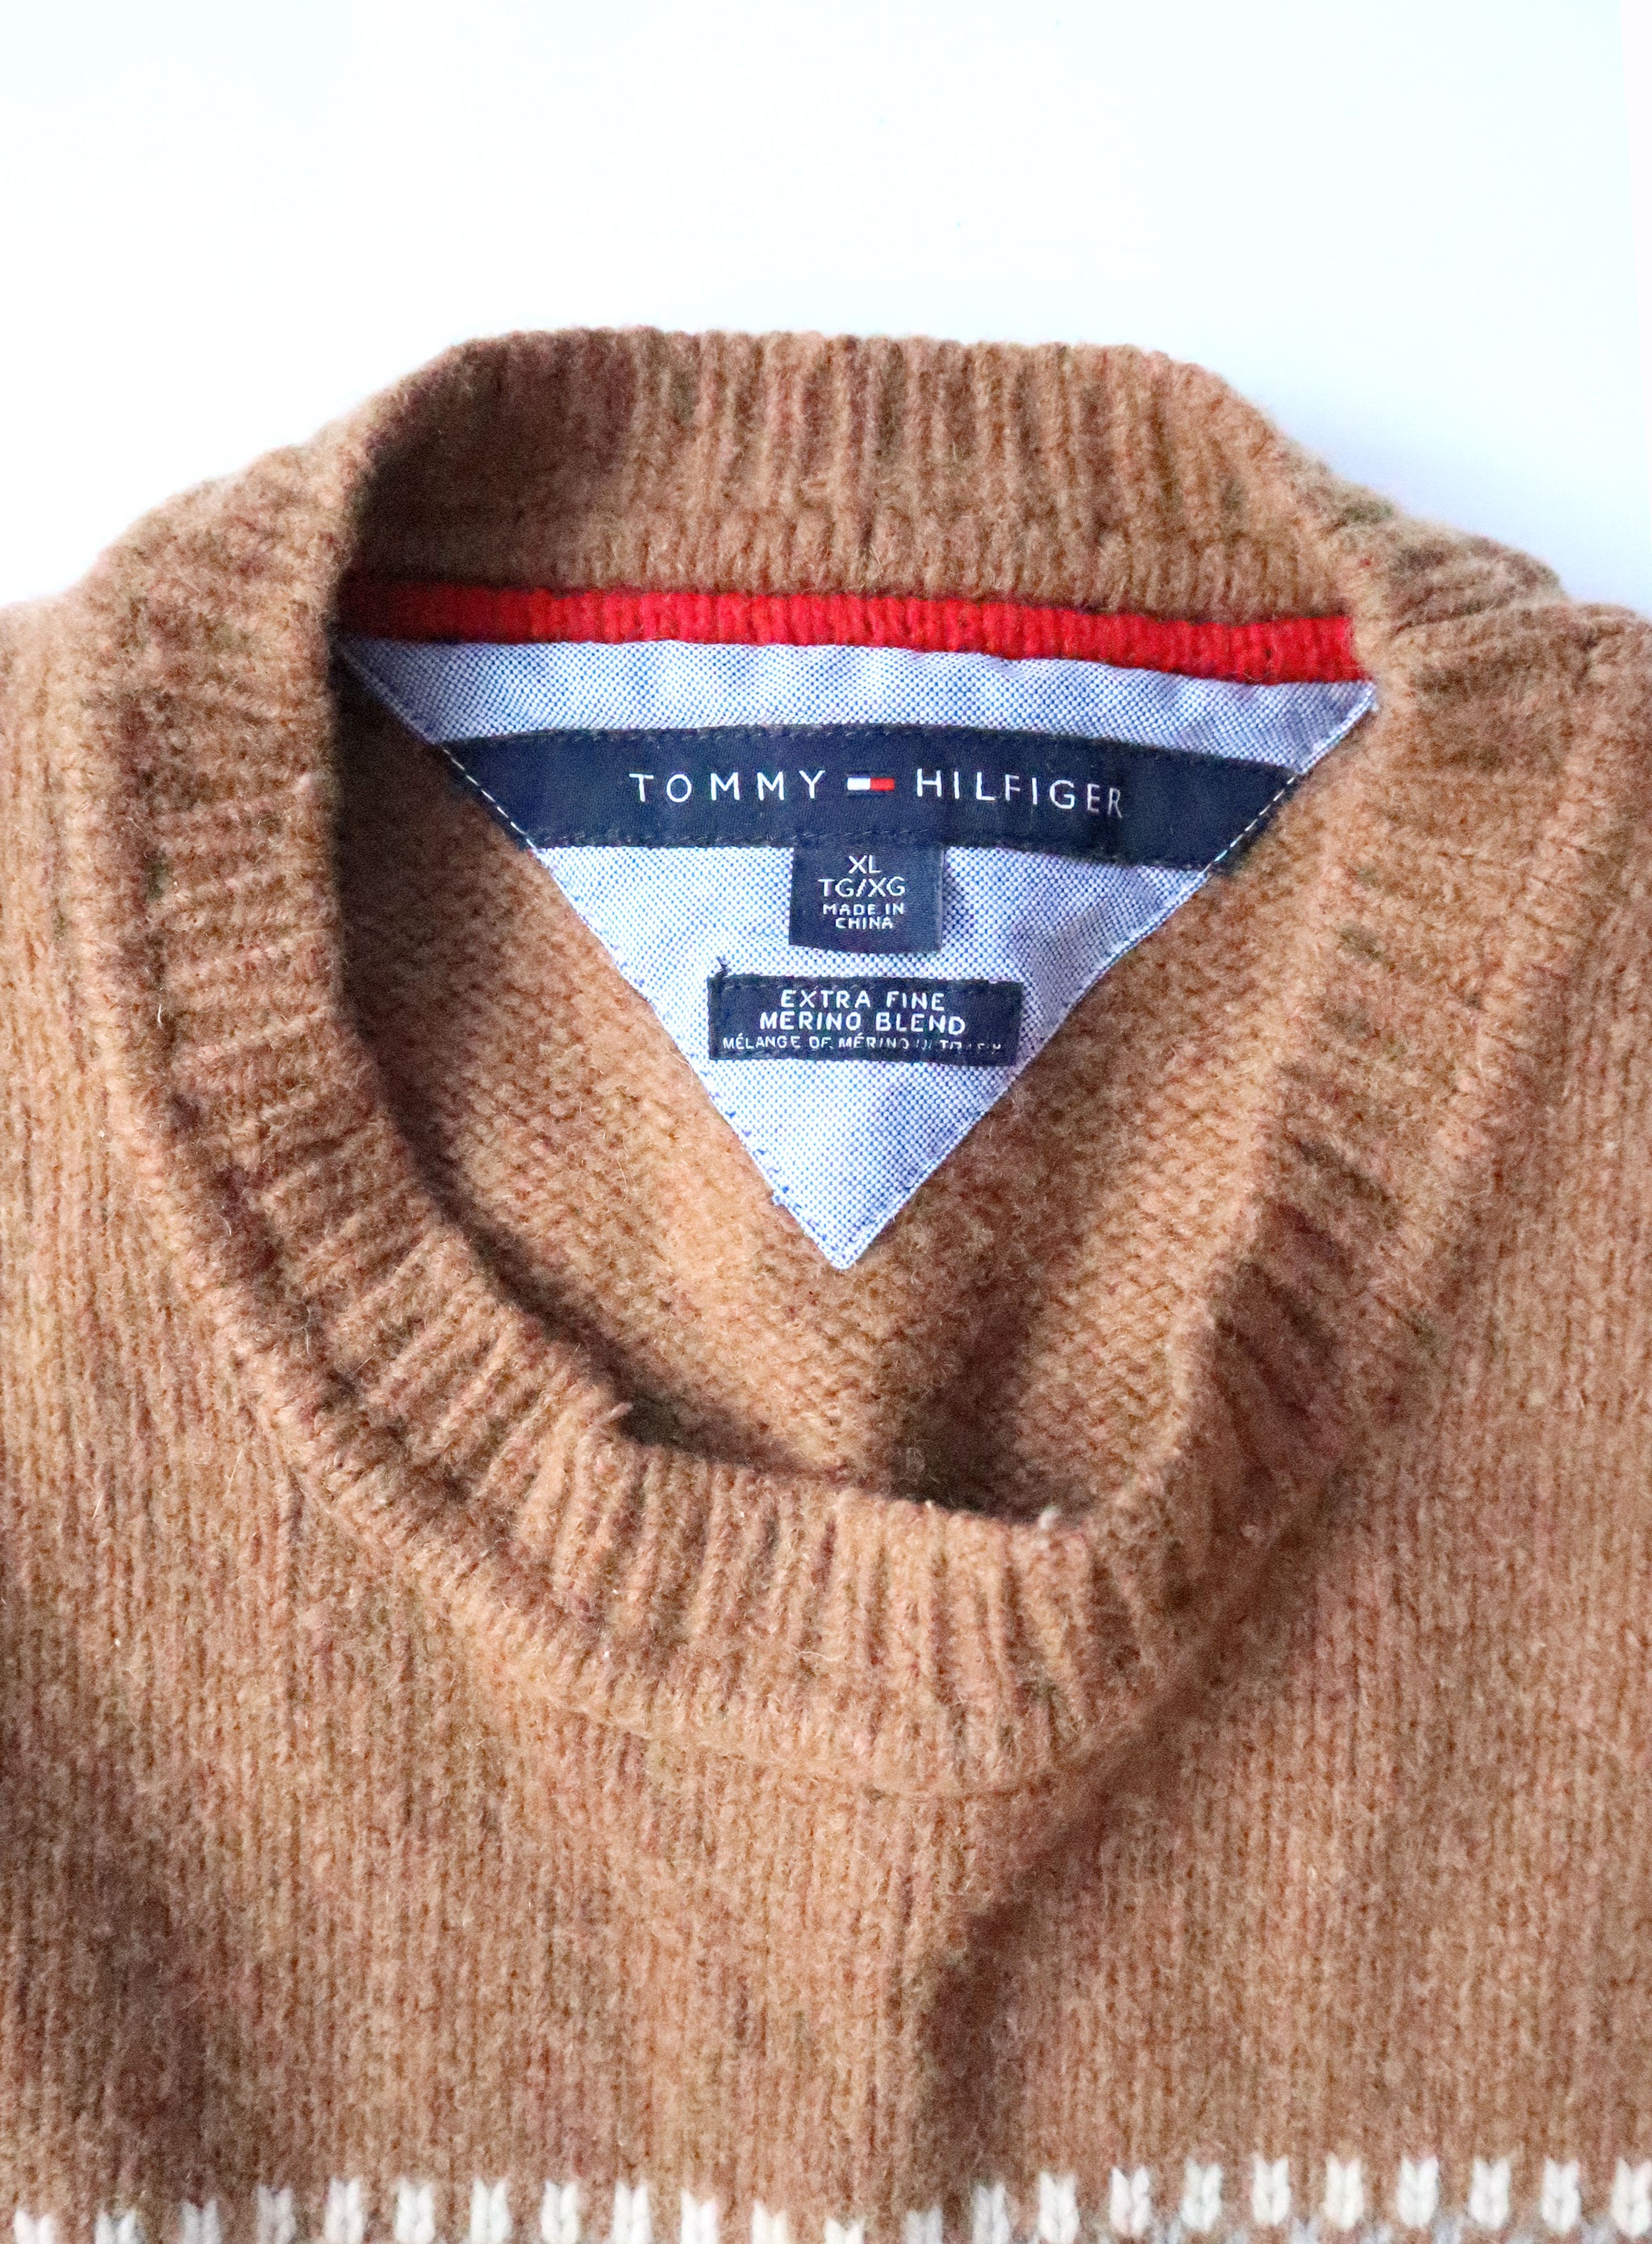 Blank Pounding spisekammer Tommy Hilfiger Tan Fairisle Style Wool Sweater - Style a Go-Go